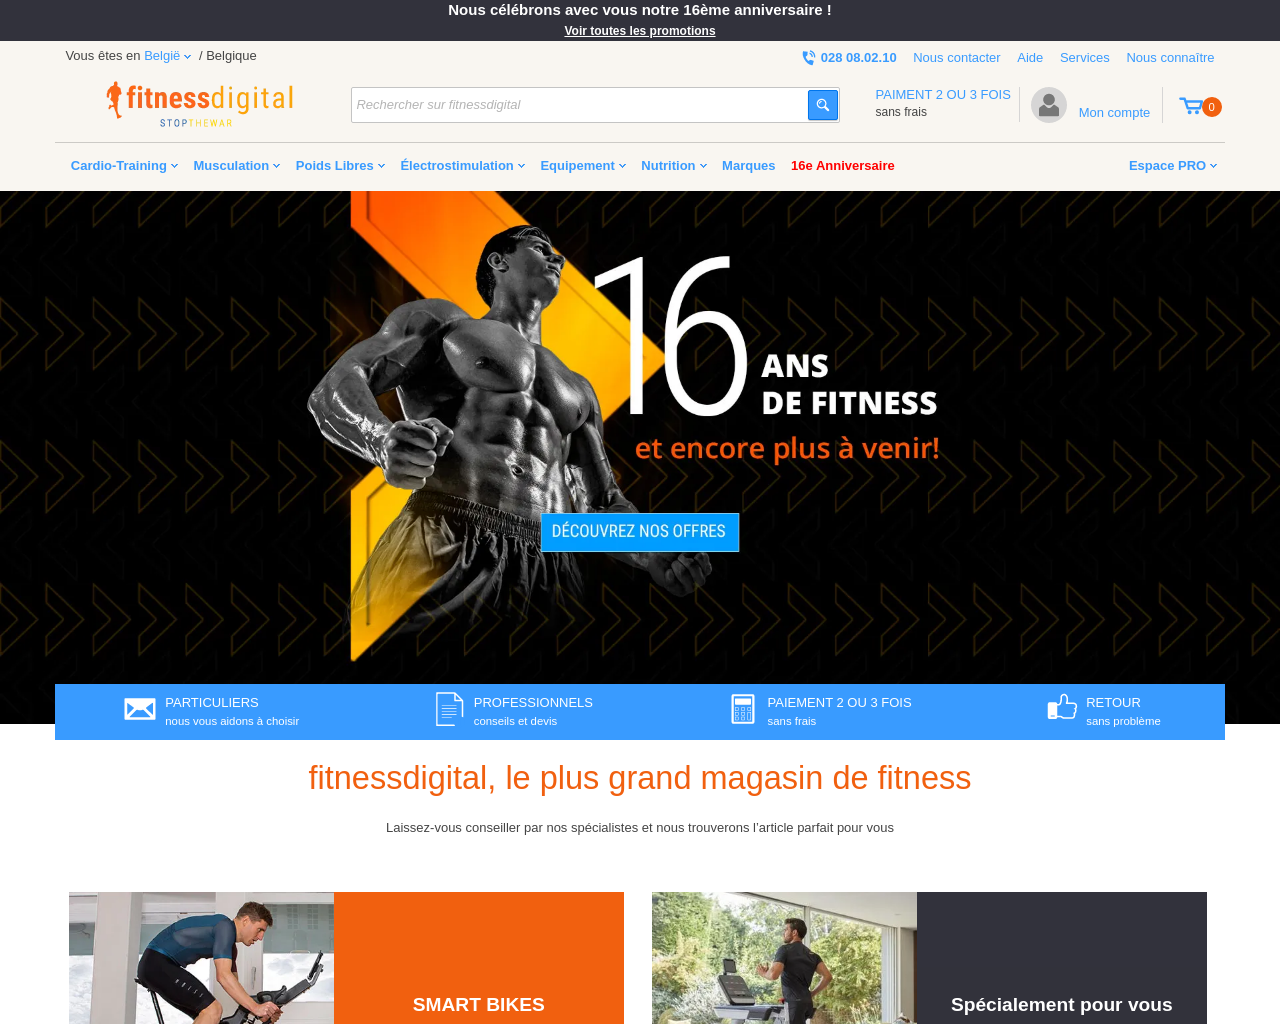 www.fitnessdigital.be